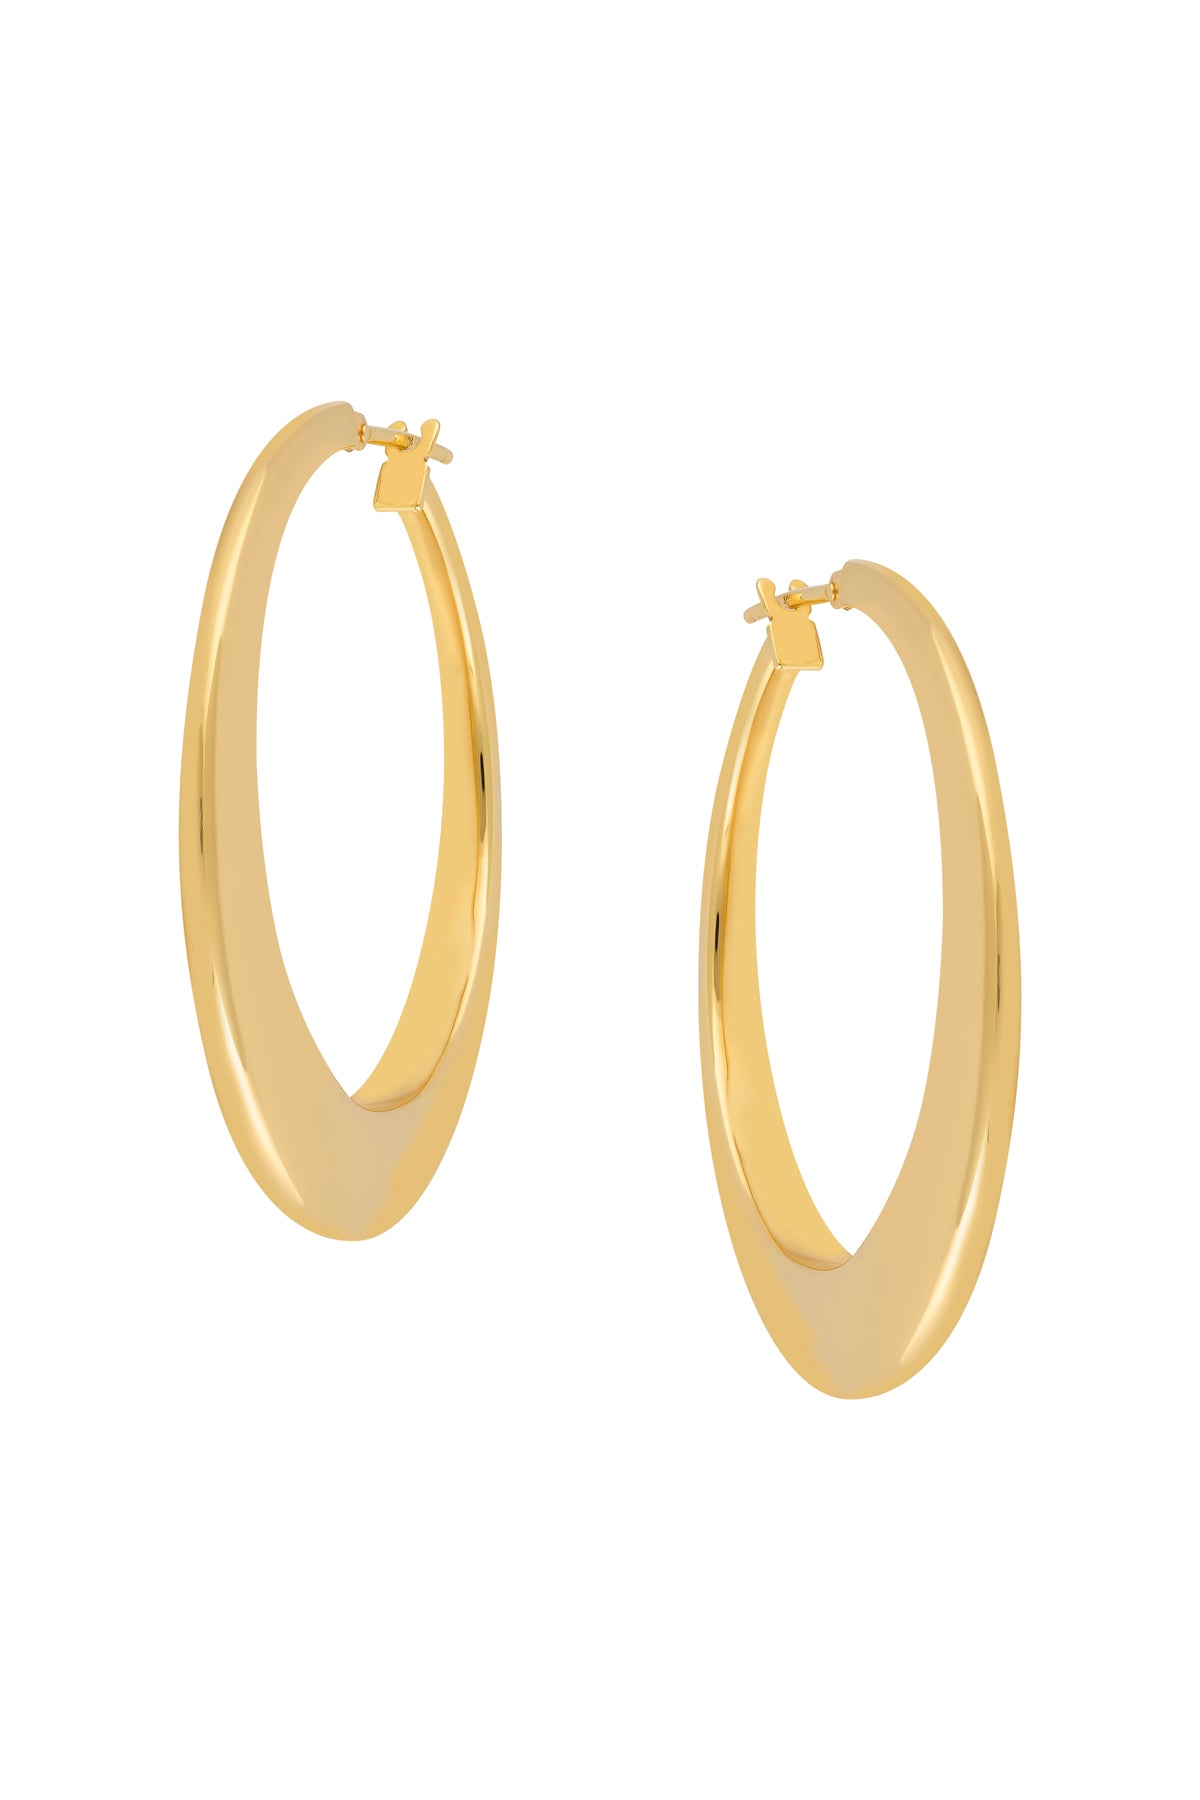 18 Carat Gold Graduated Flat Tube Earrings from LeGassick Jewellery.